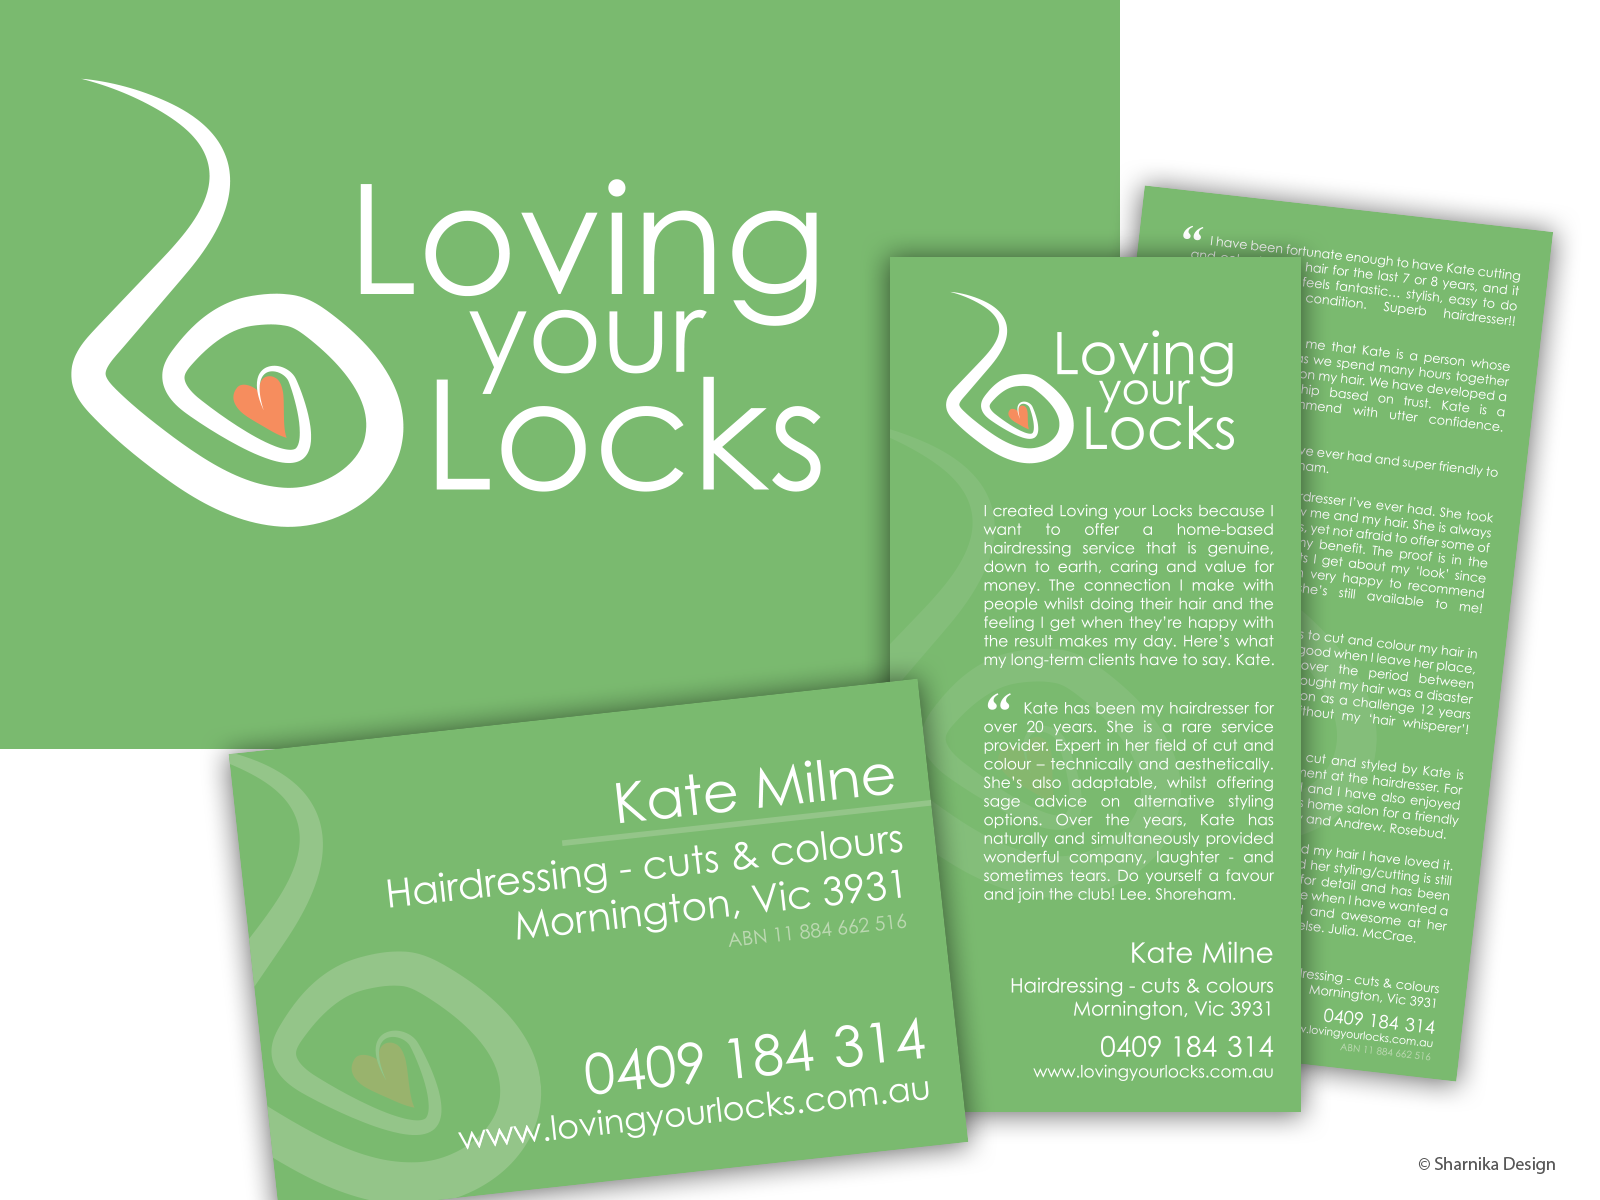 Logo, website and advertising for Loving Your Locks